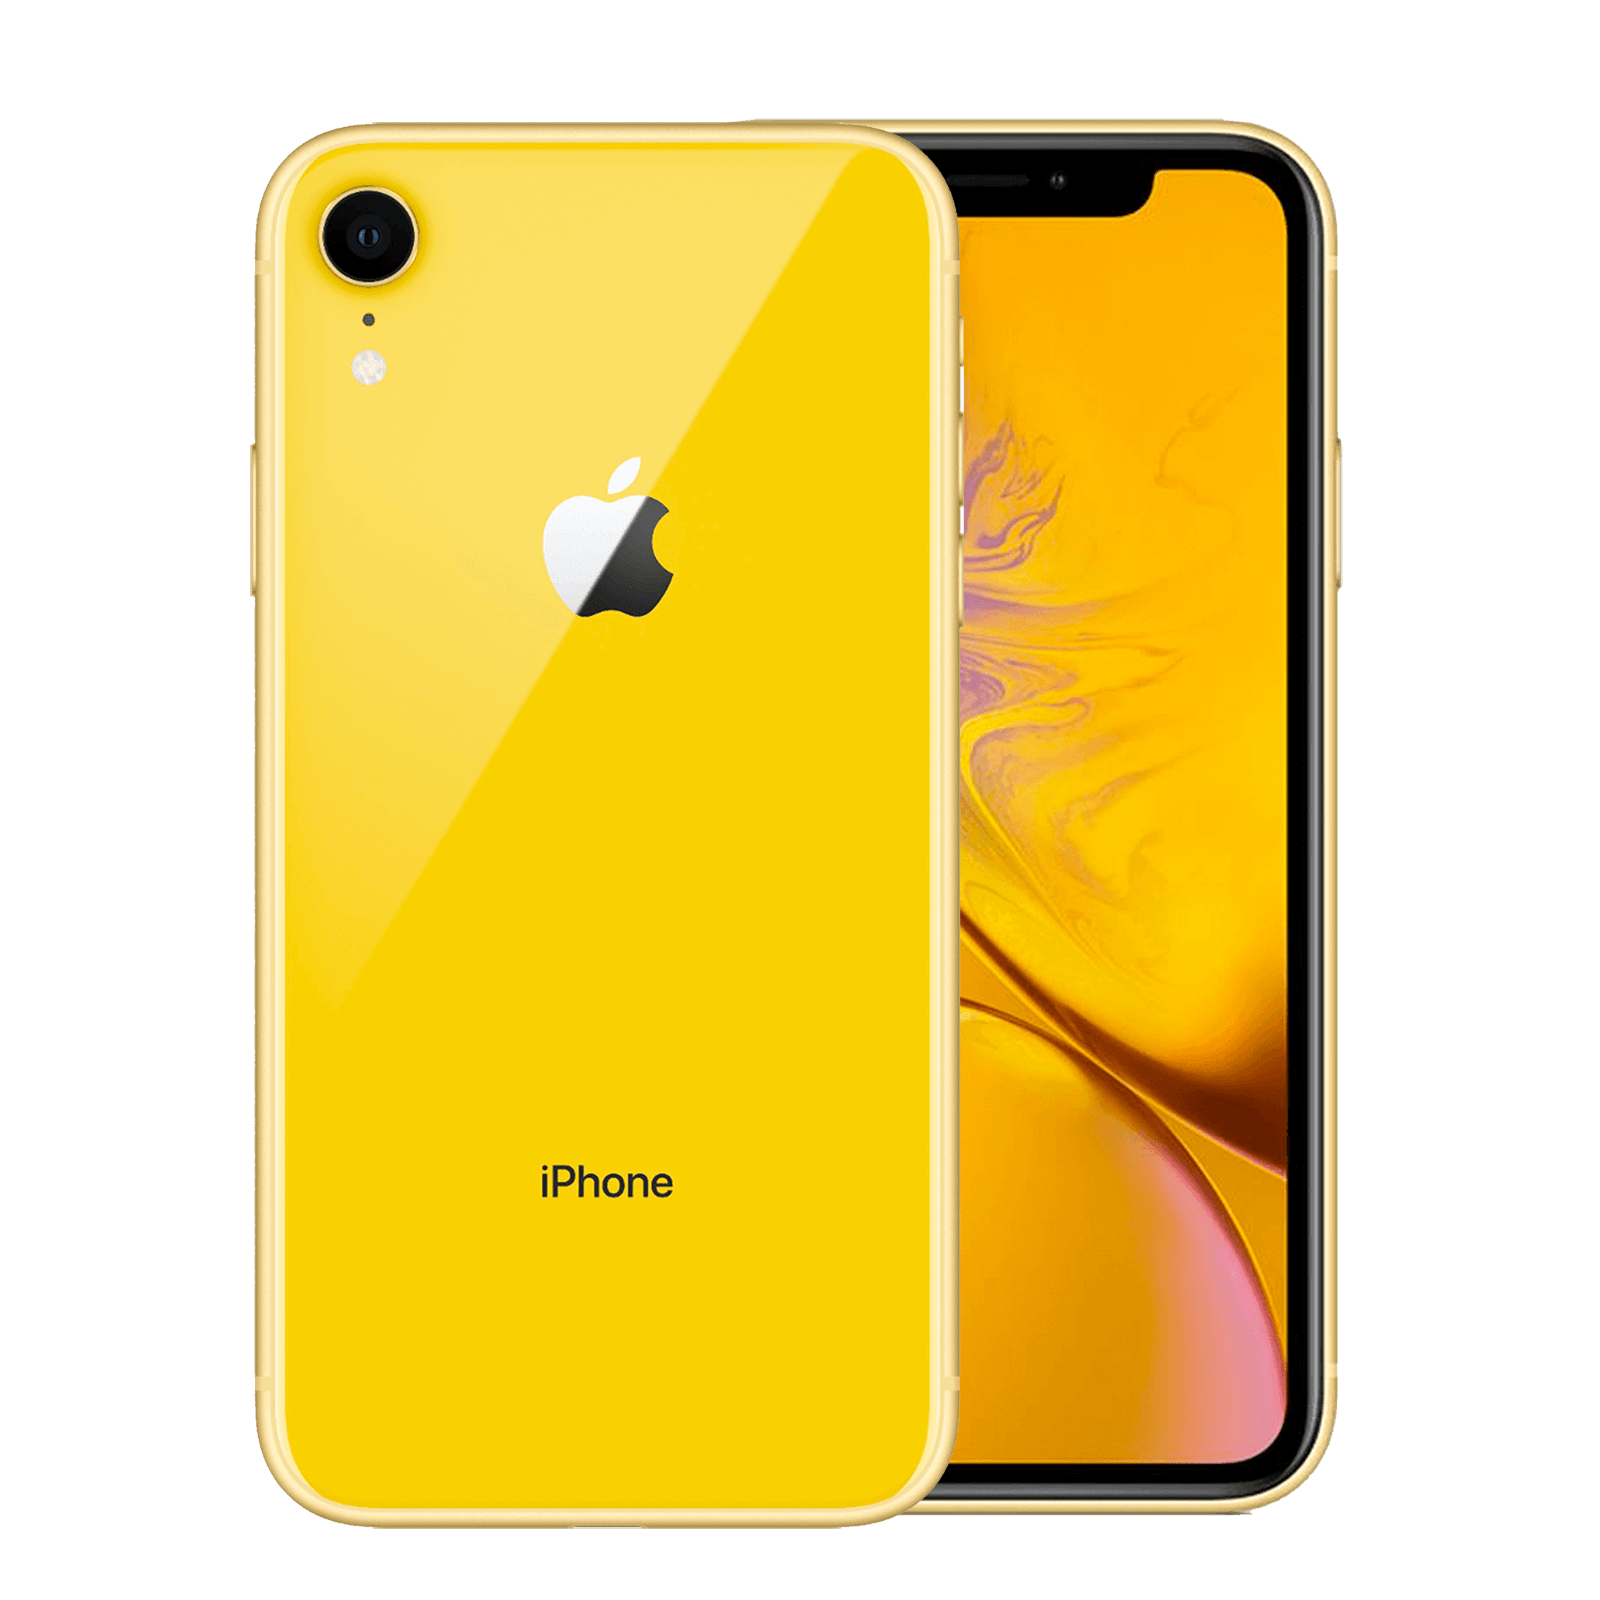 Apple iPhone XR 256GB Yellow Good - Unlocked